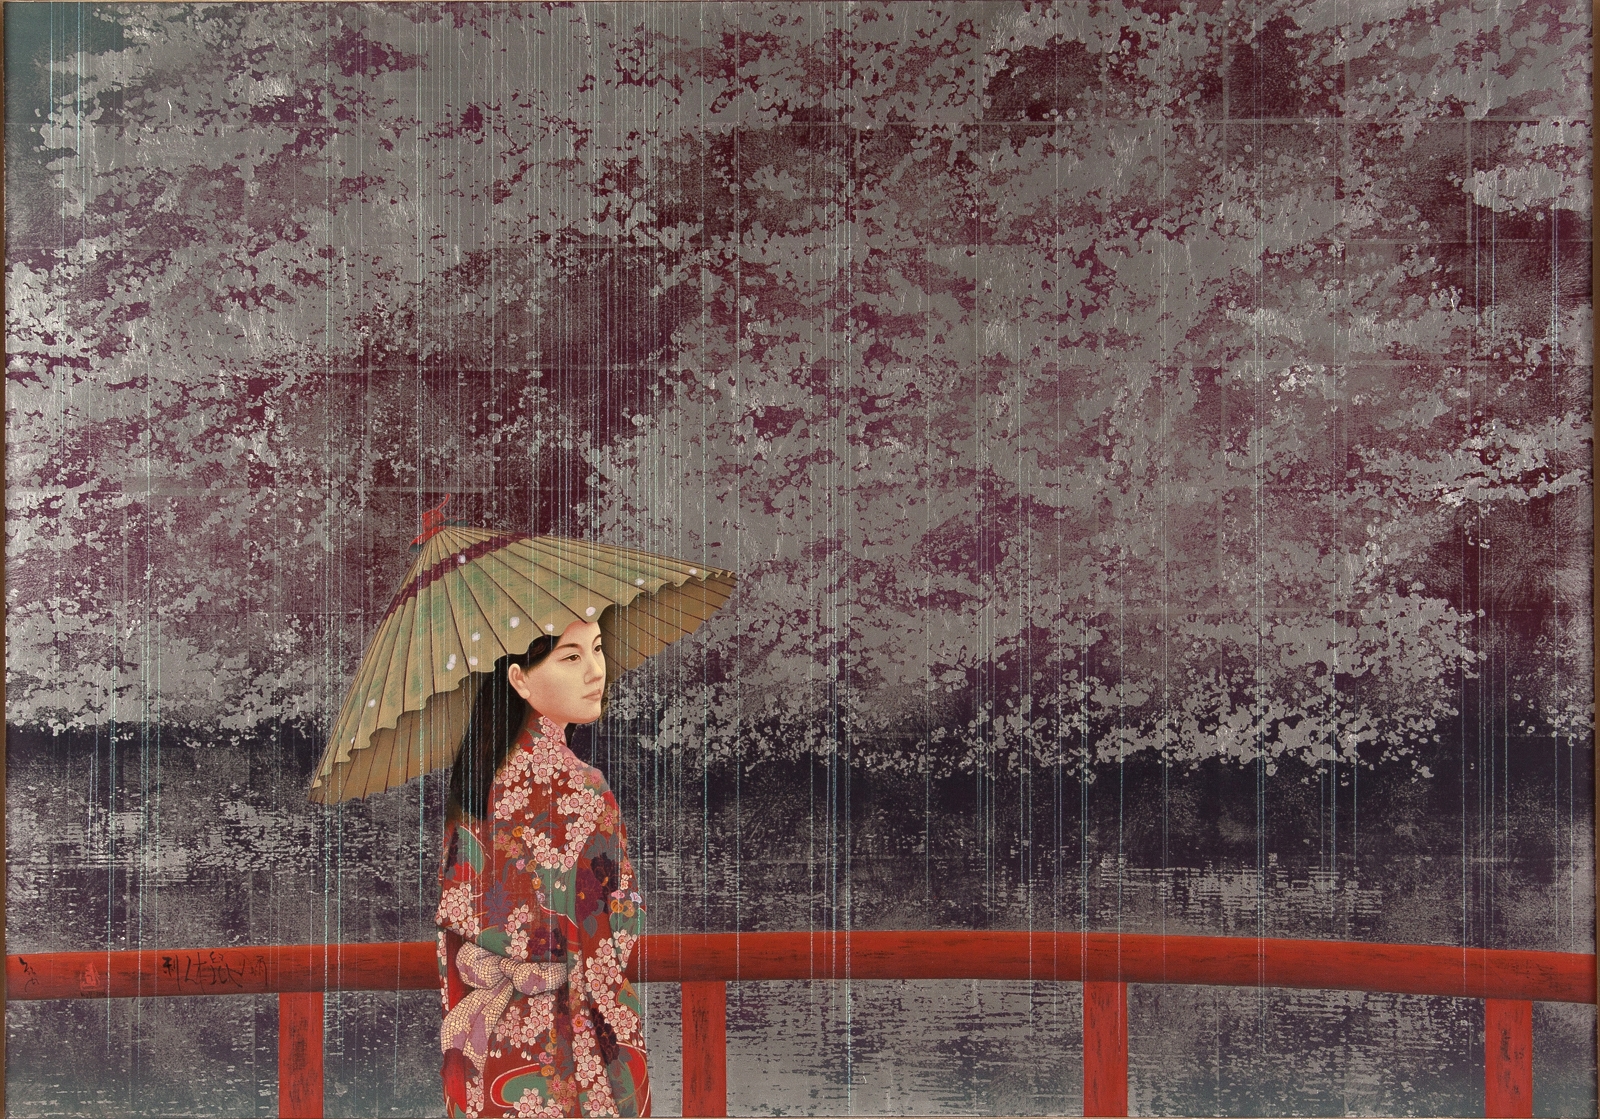 Kyosuke Tchinai for Elena Shchukina Gallery